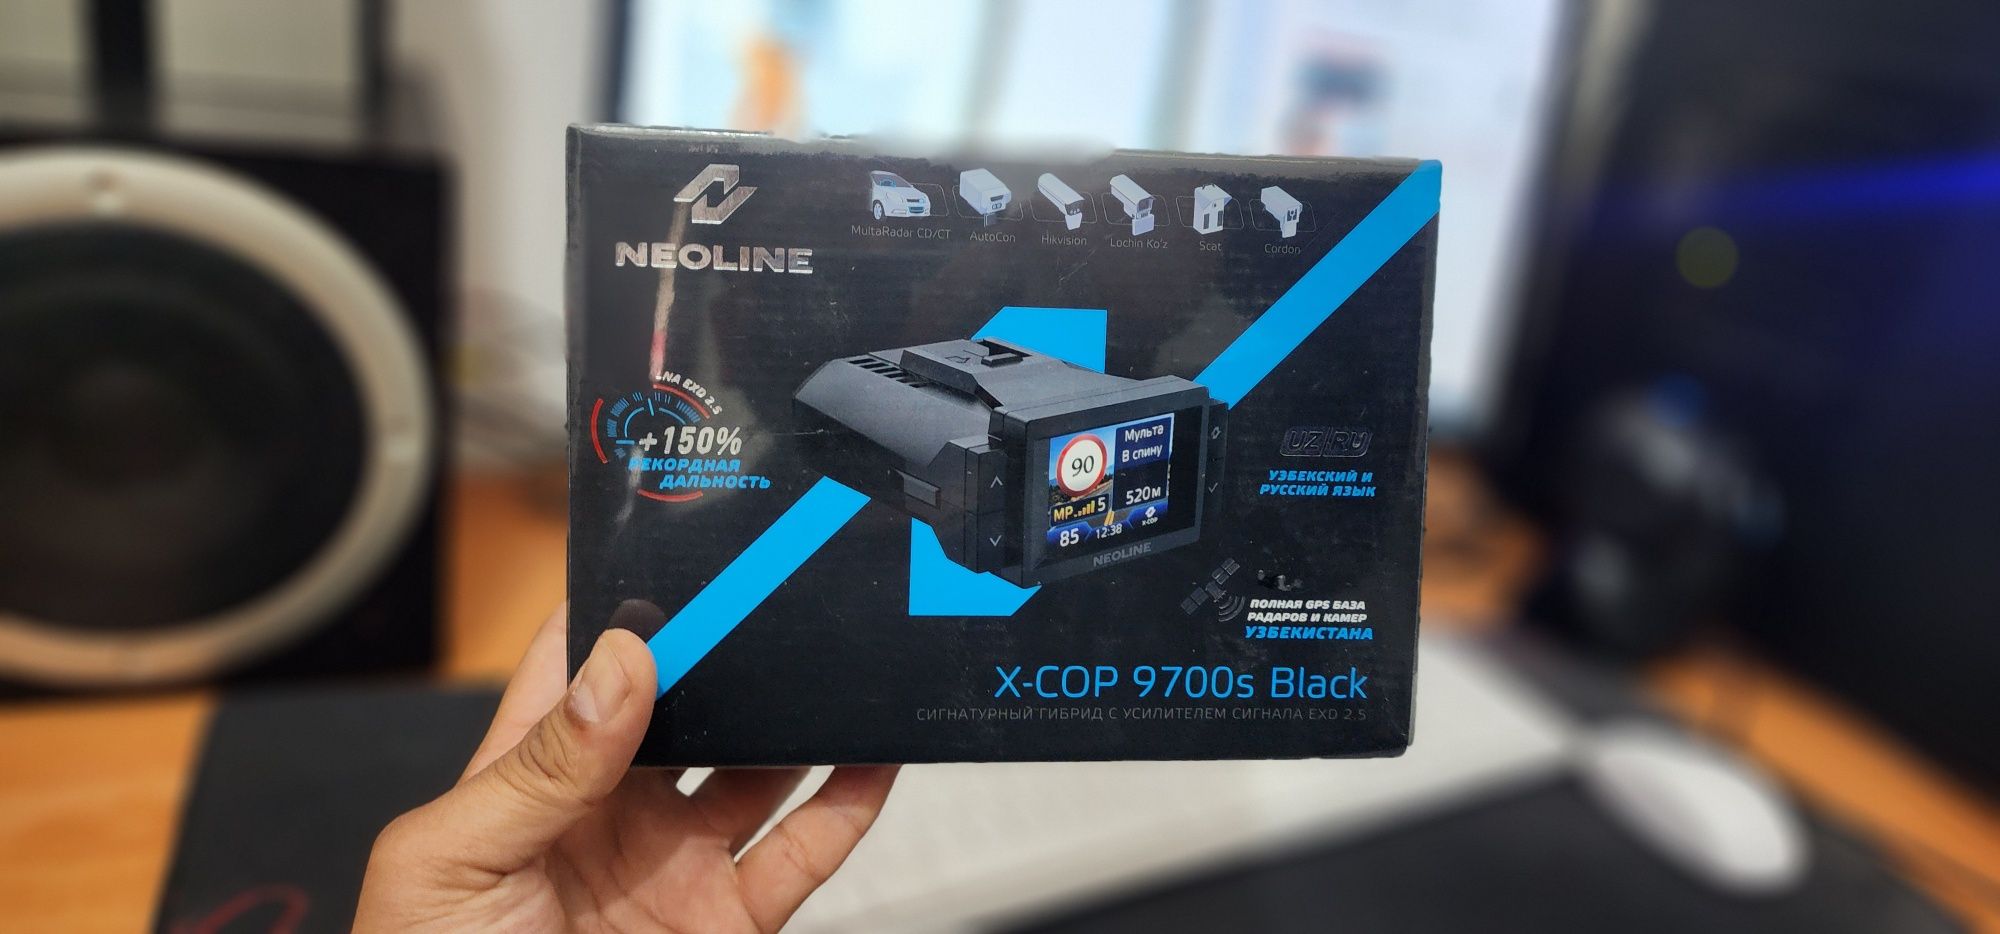 Neoline Xcop 9700s black o'dari radar antradar dostafka web 24/7